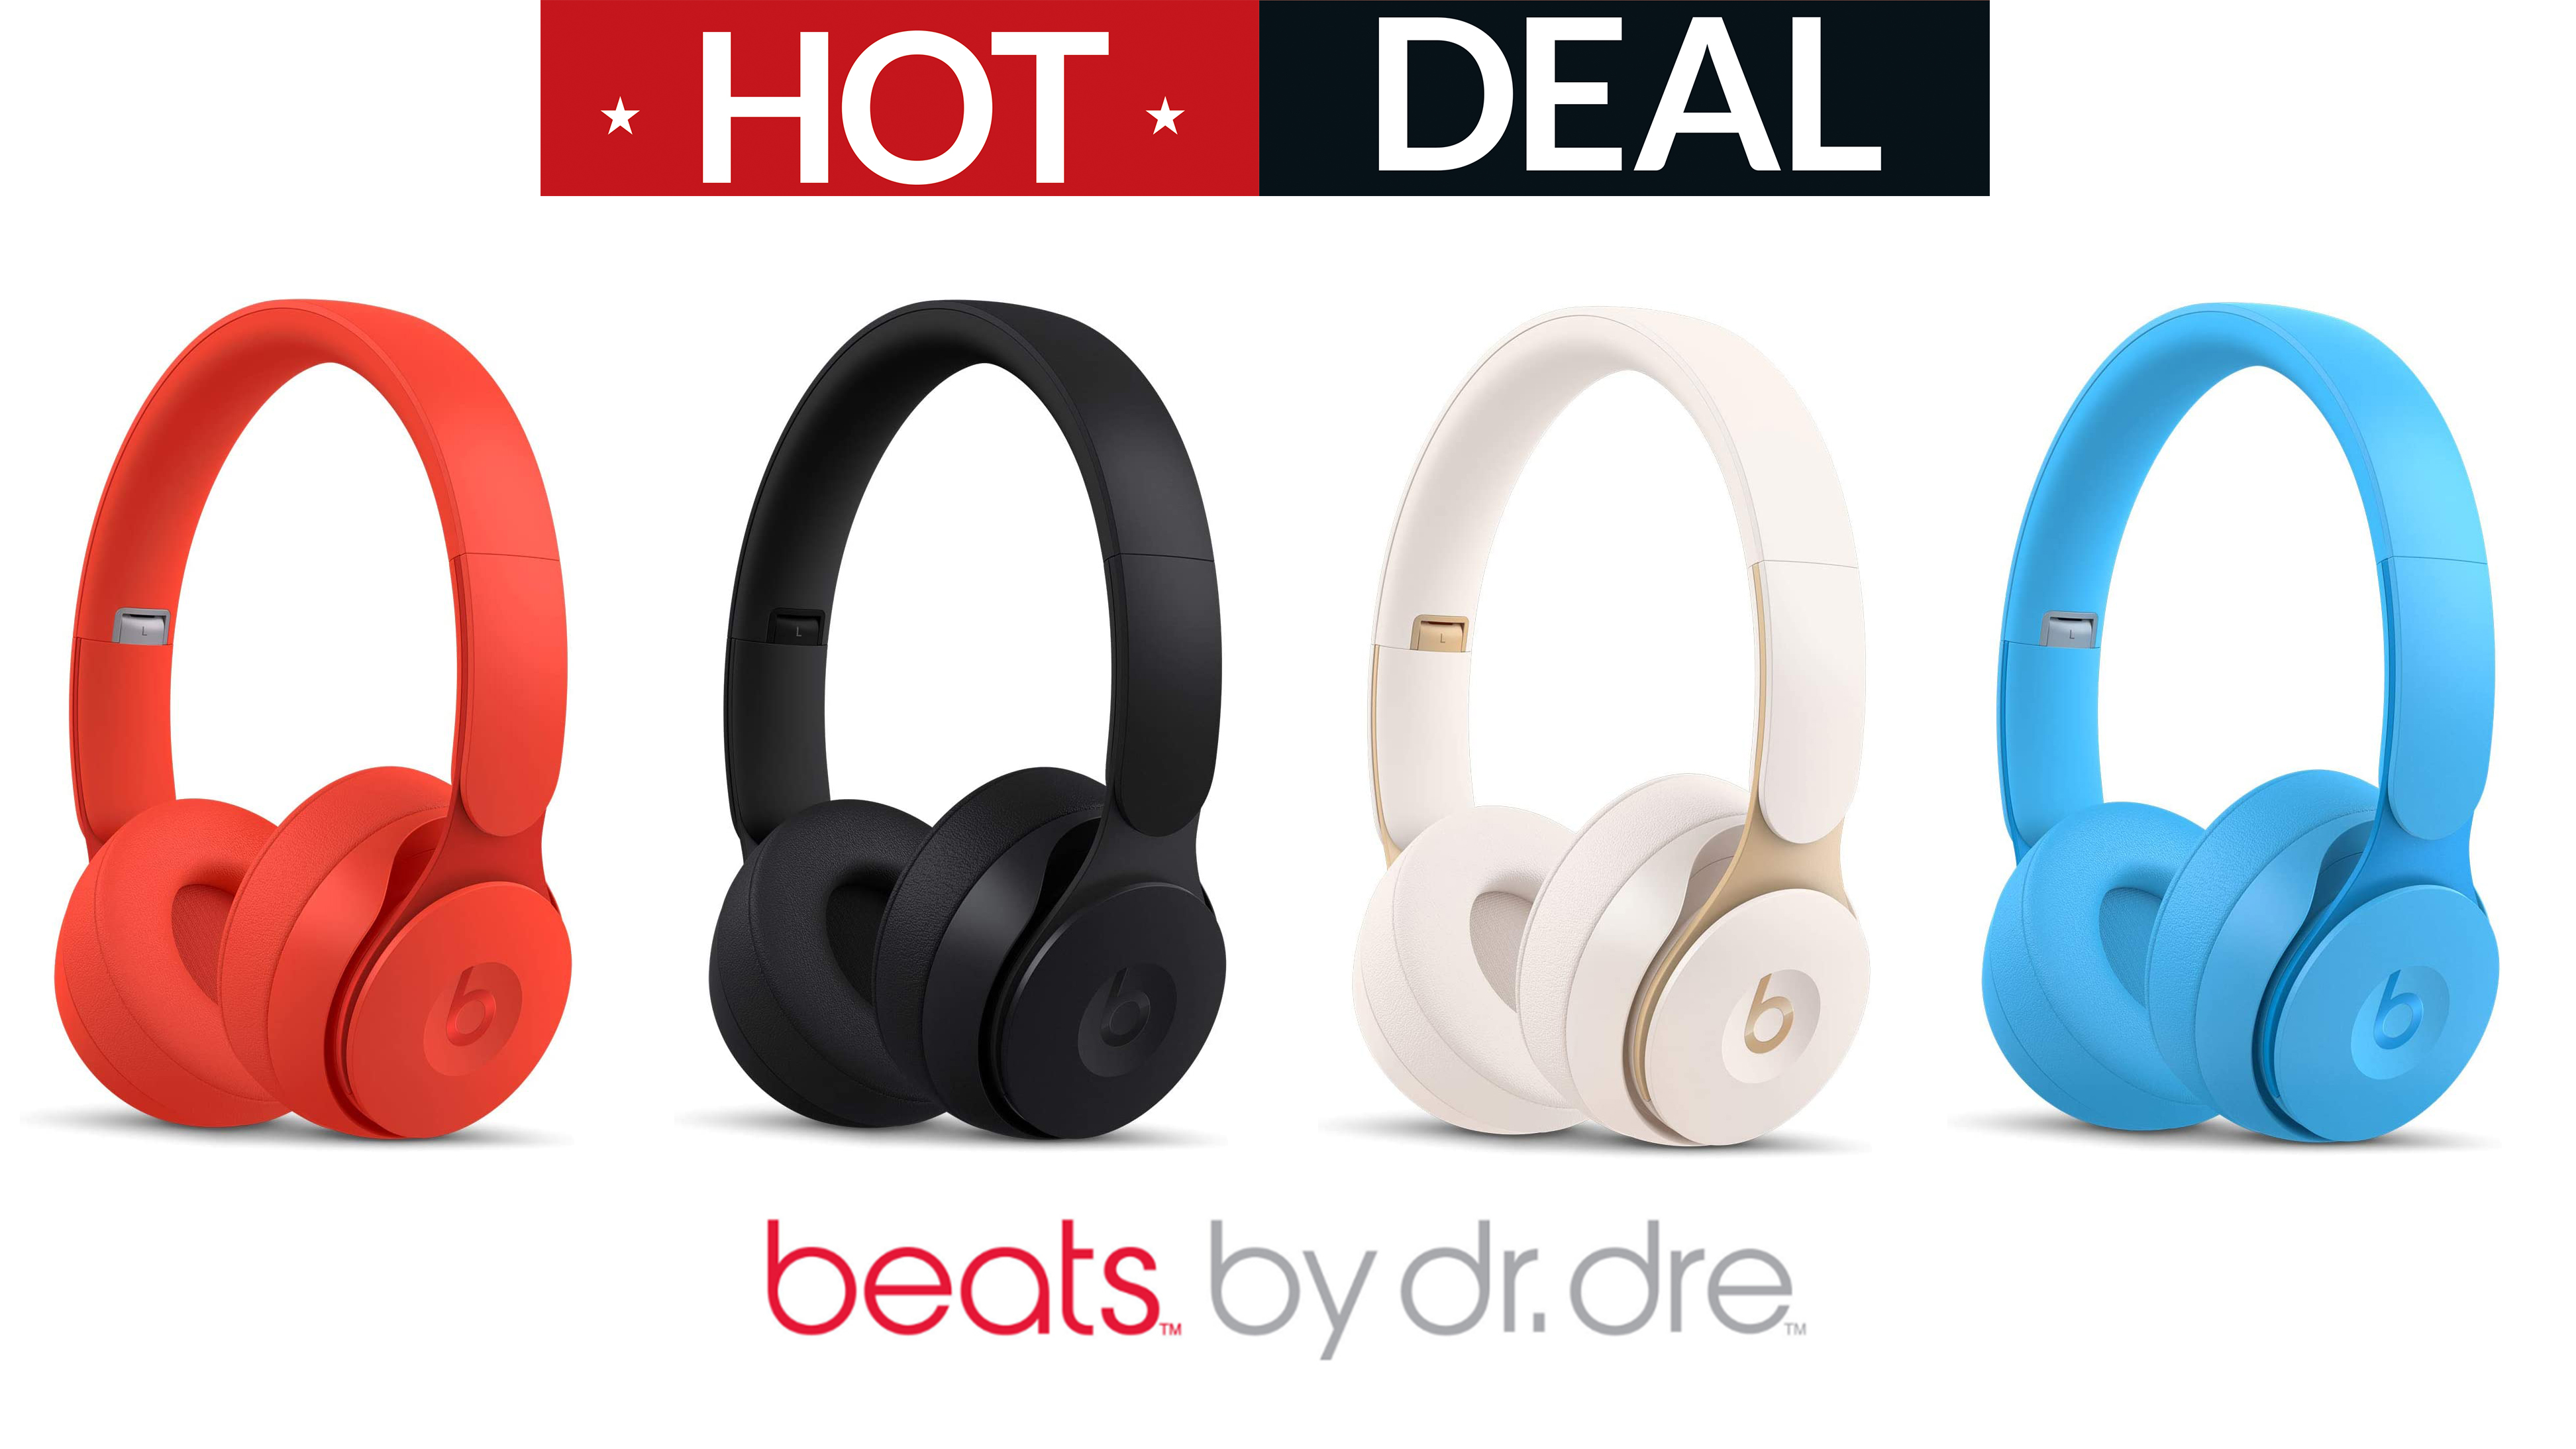 amazon prime day headset deals